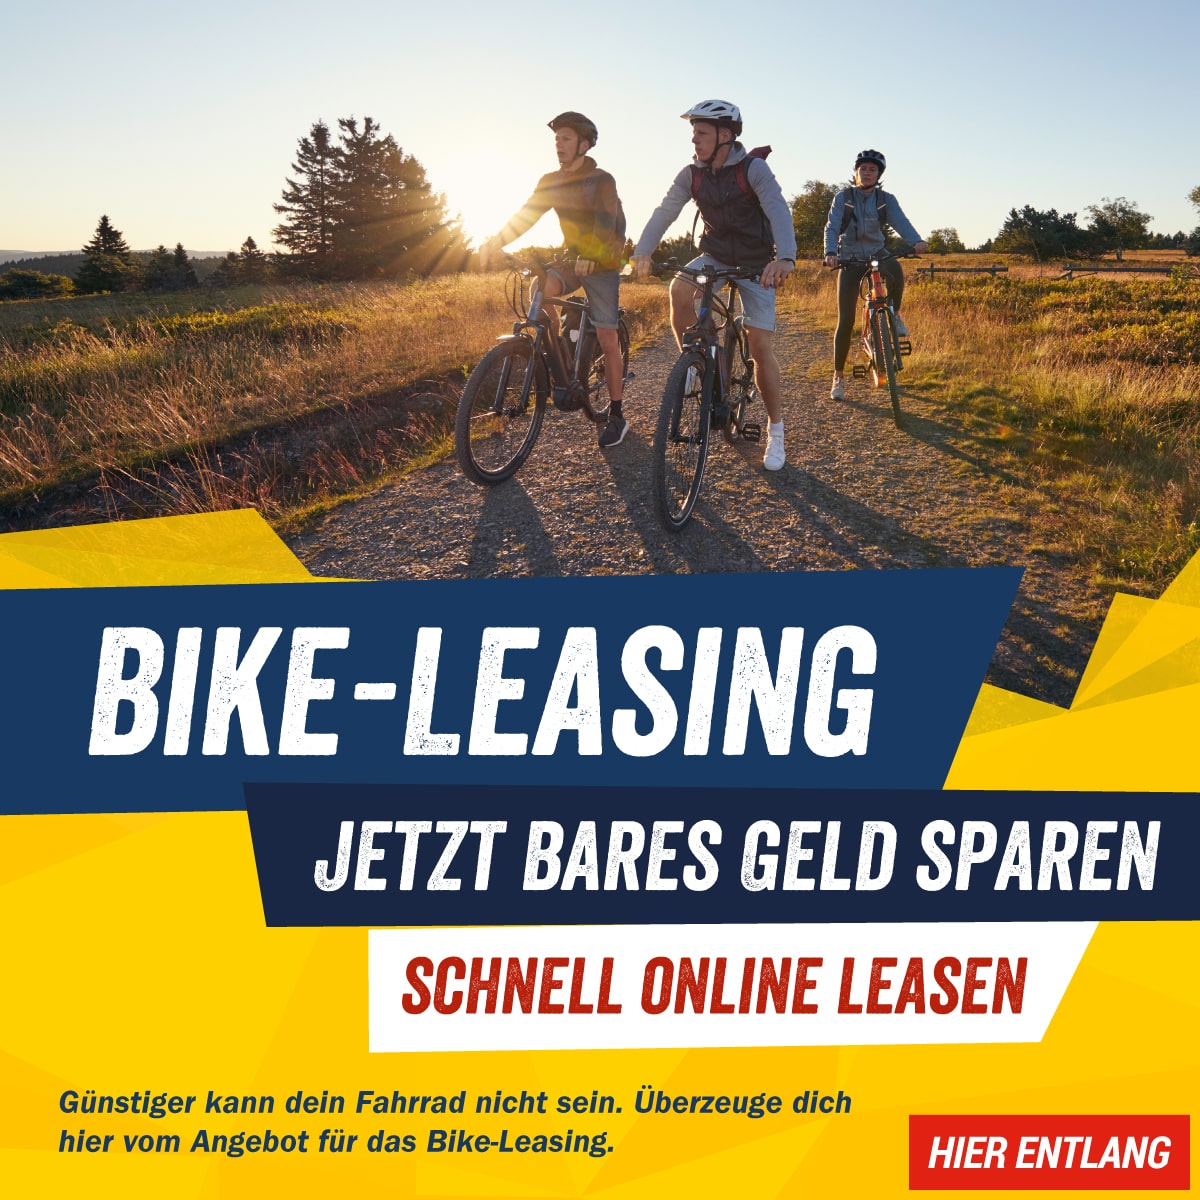 Bike-Leasing im BIKE Market